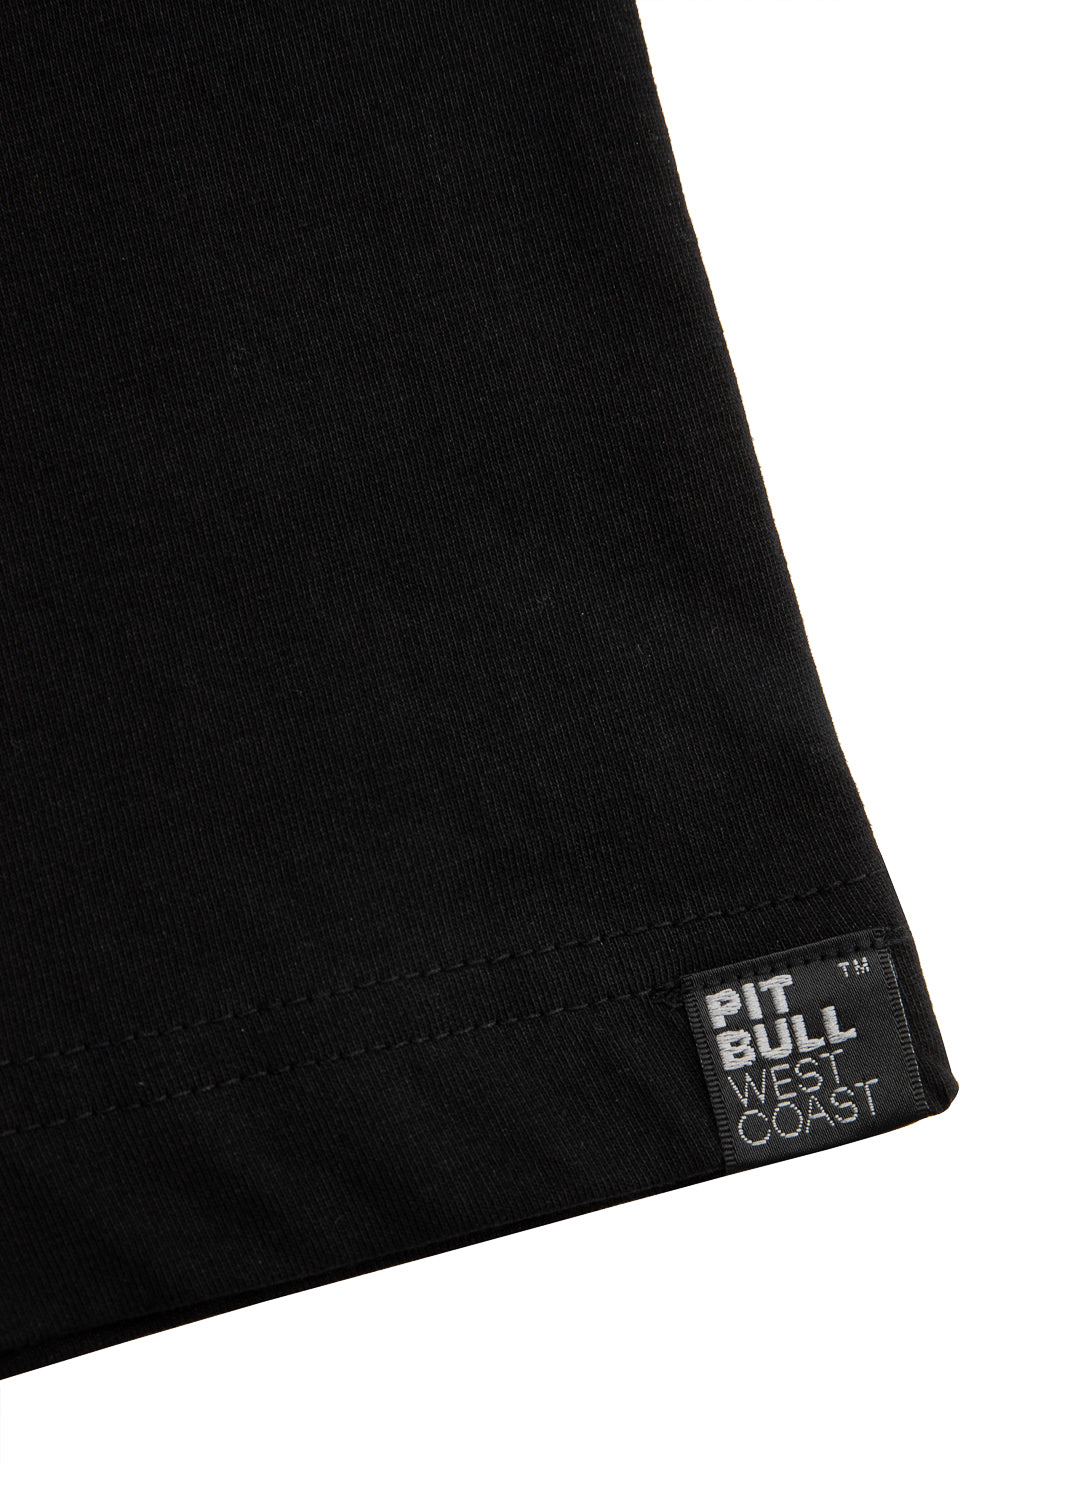 ALL BLACK HILLTOP Black T-shirt